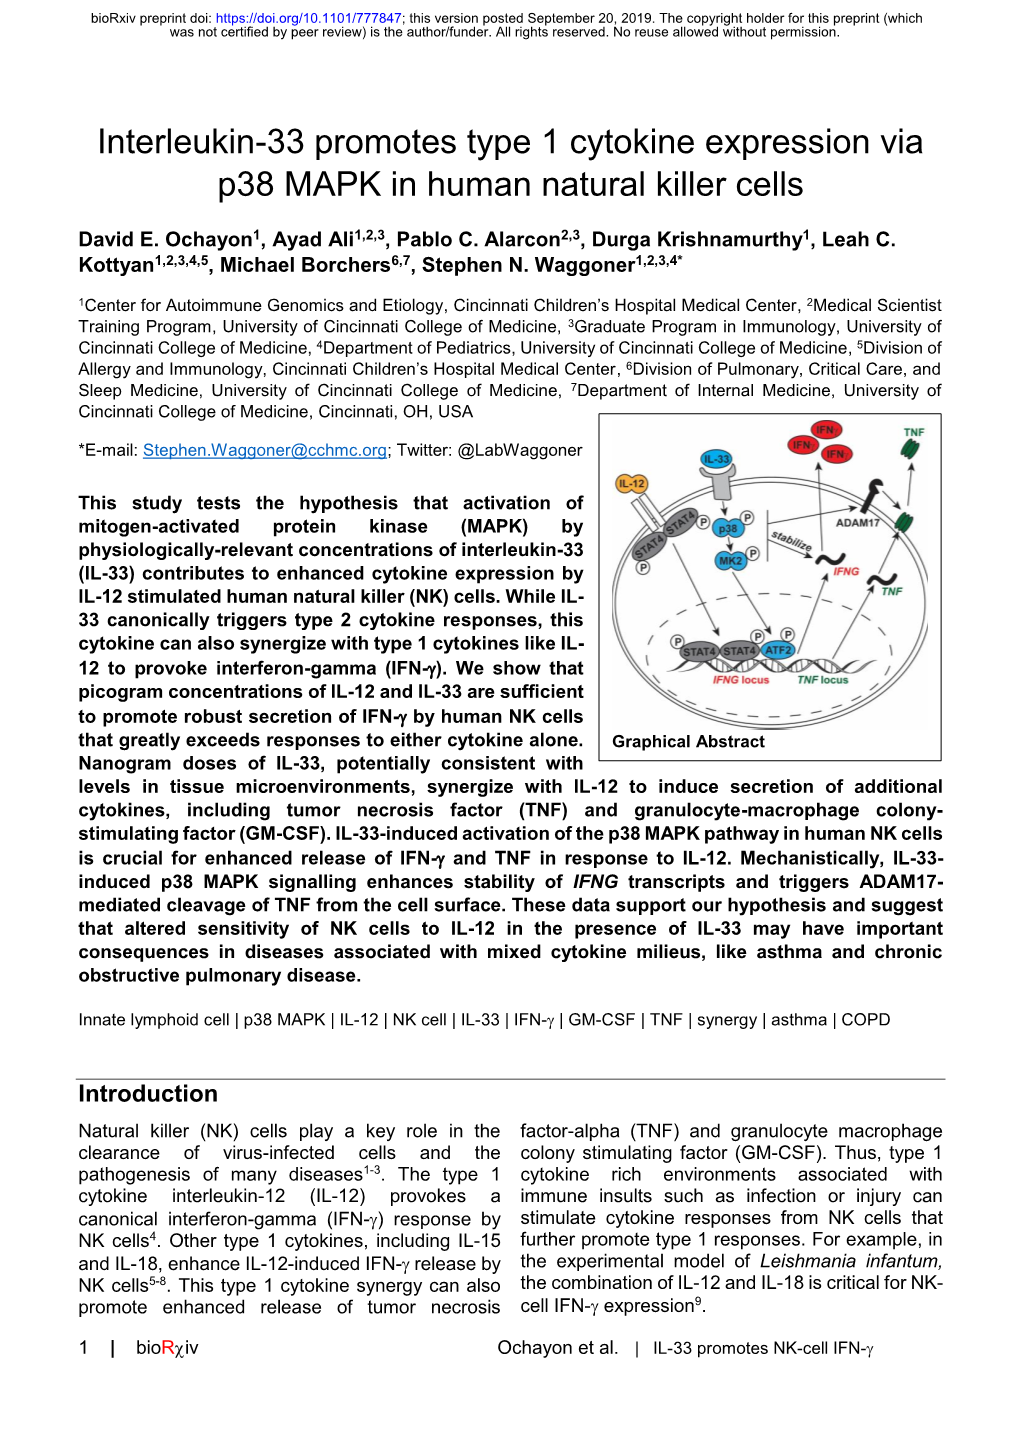 Interleukin-33 Promotes Type 1 Cytokine Expression Via P38 MAPK in Human Natural Killer Cells